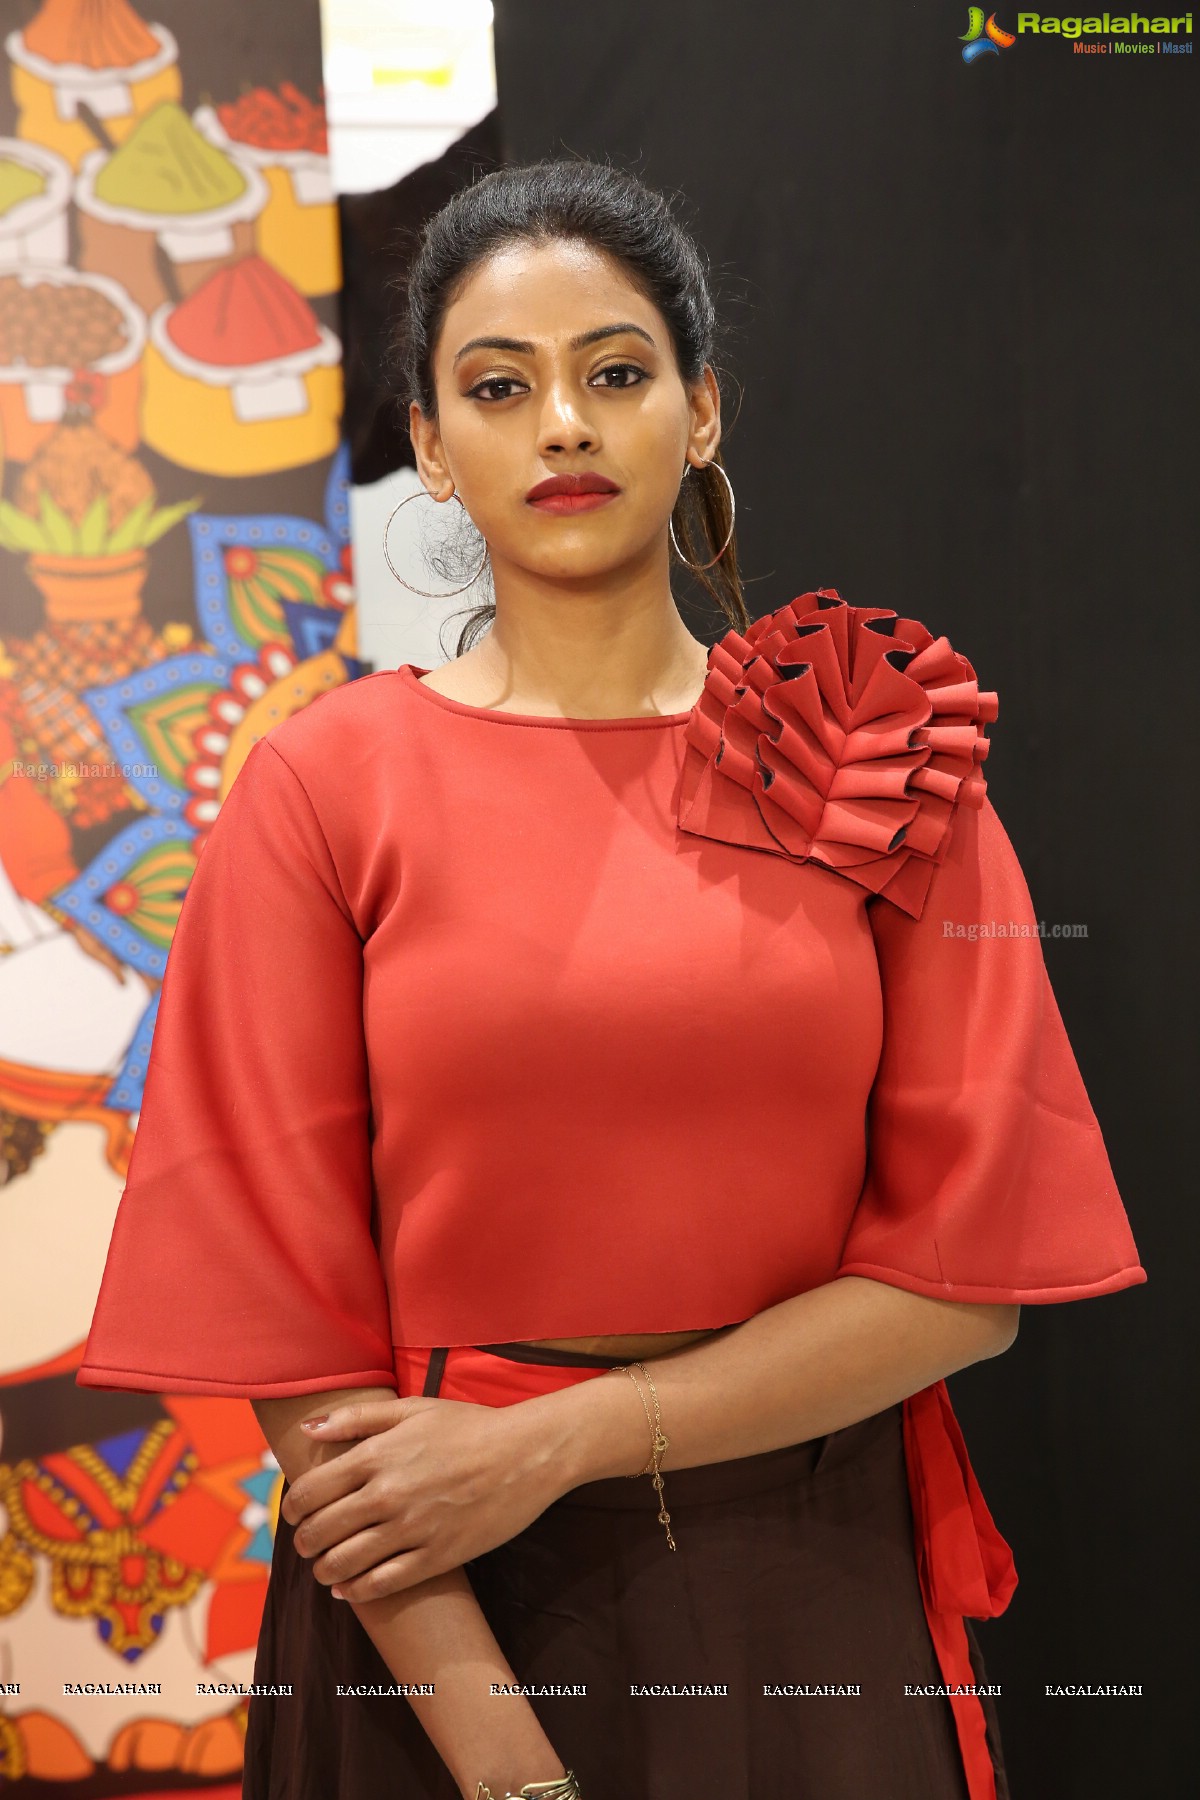 fbb Colors Femina Miss India 2019 Telangana Auditions at inorbit Mall in Hyderabad